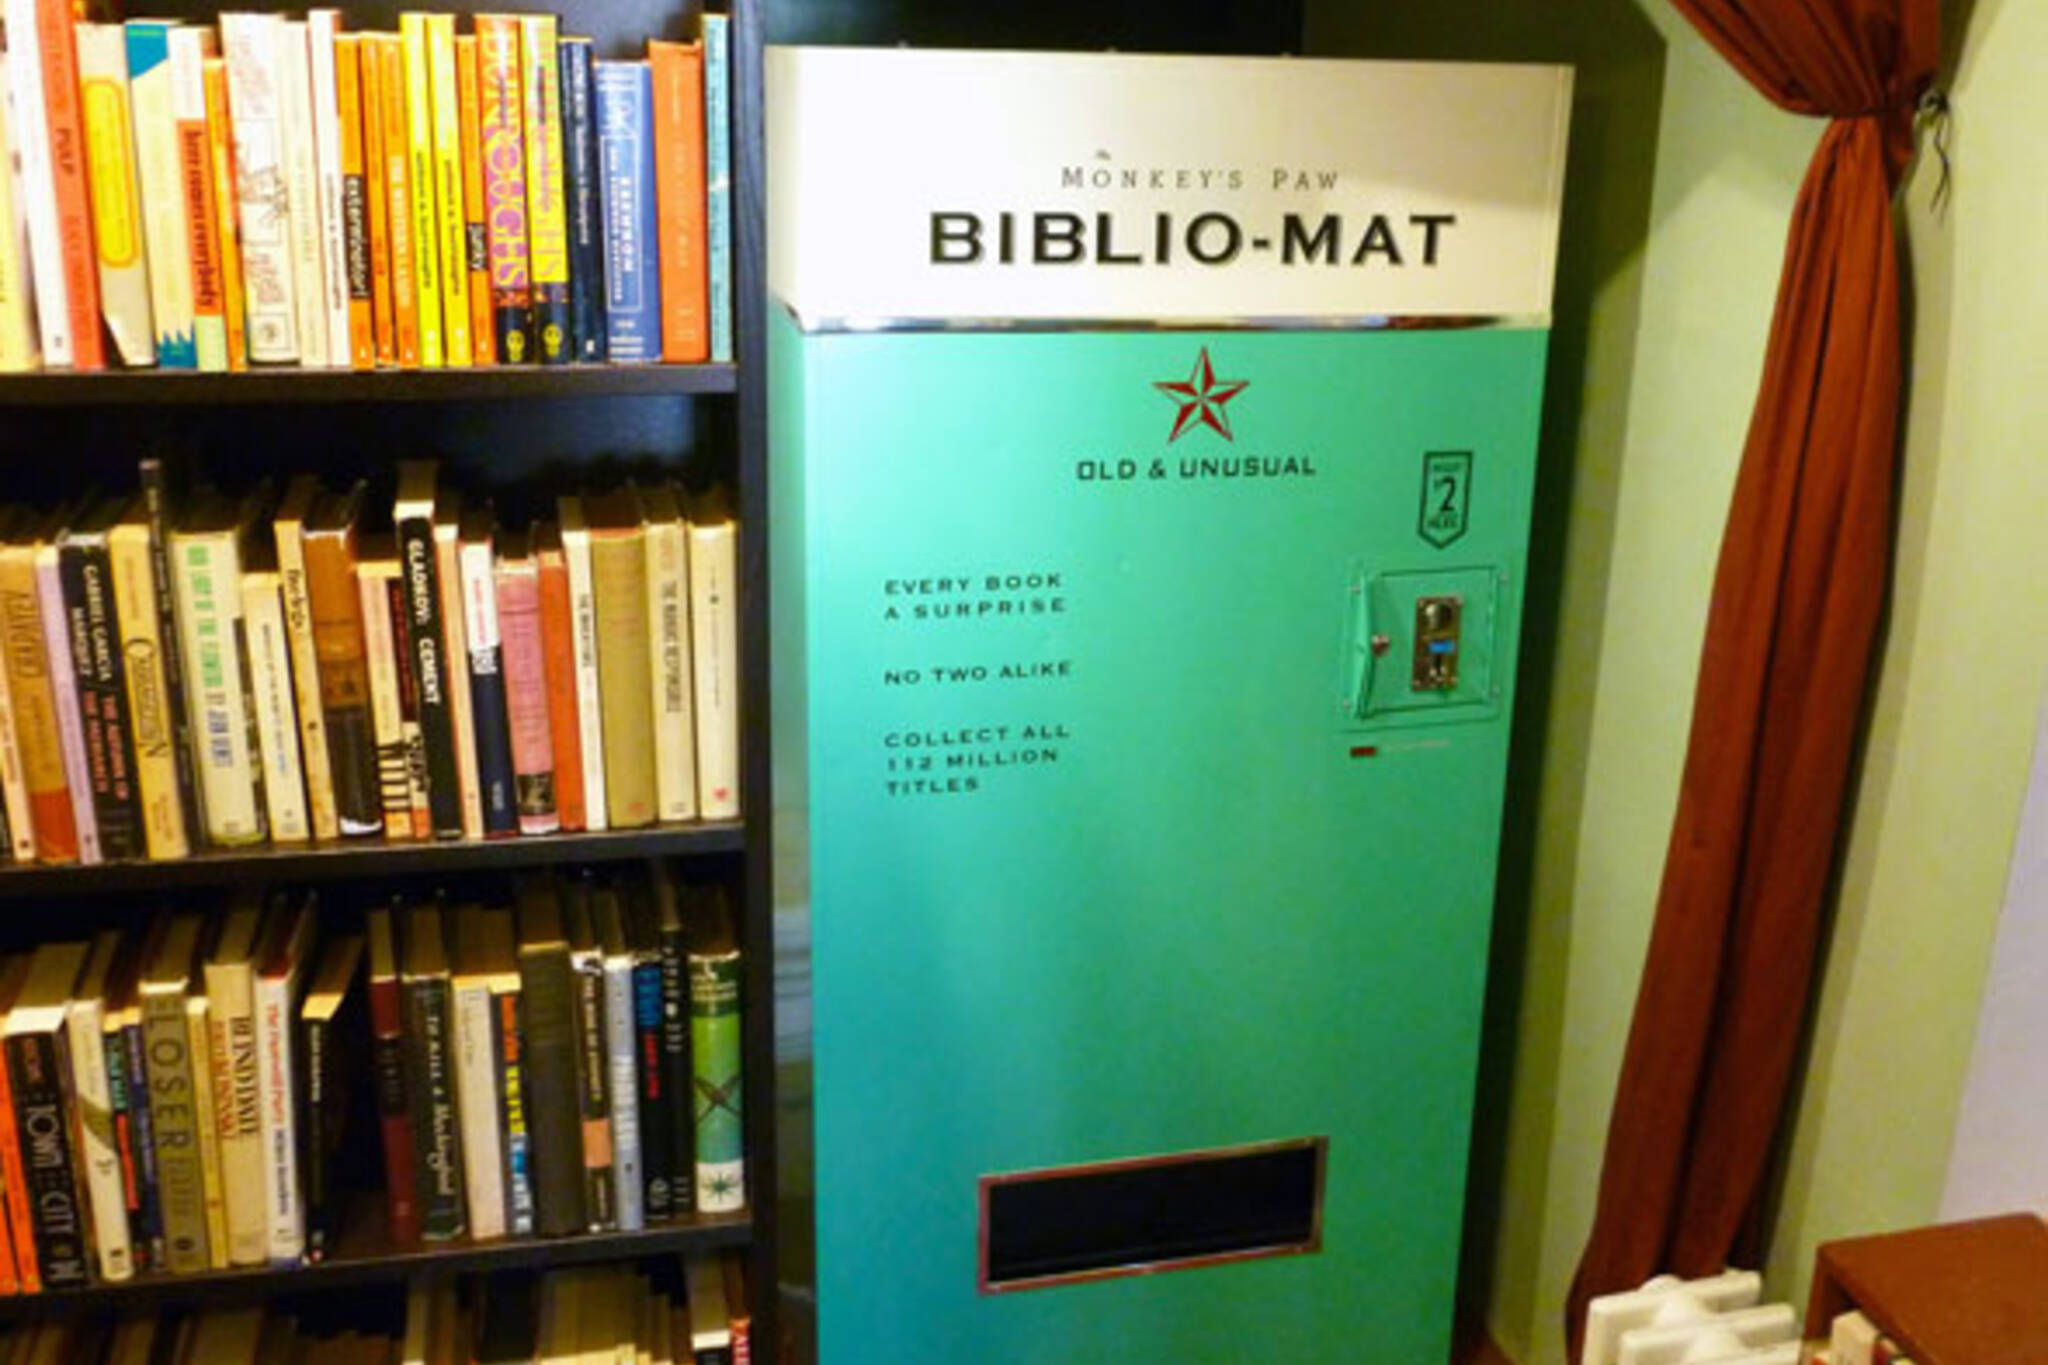 toronto monkey's paw book vending machine